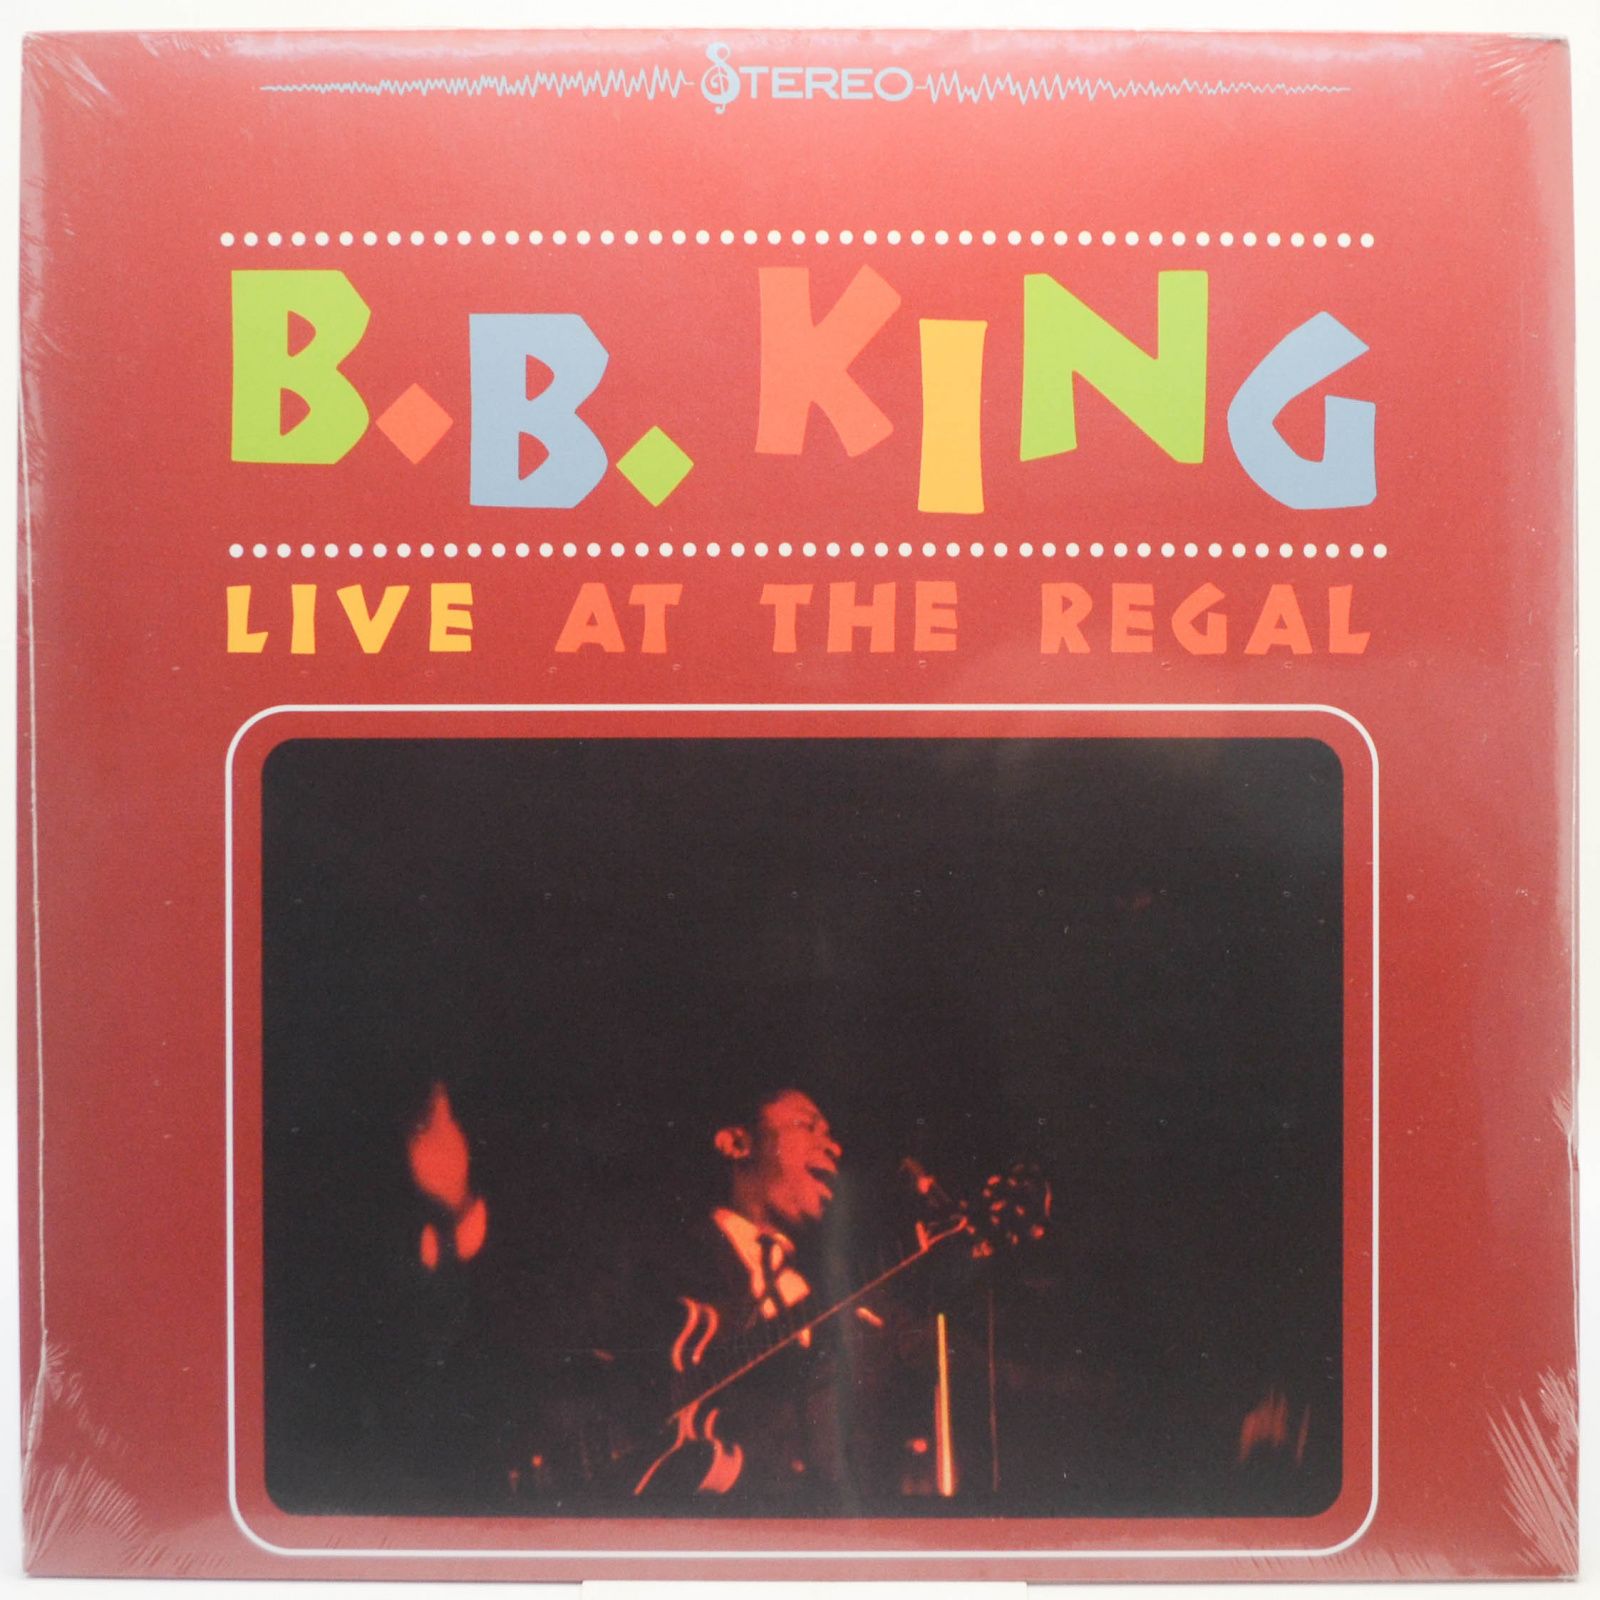 B.B. King — Live At The Regal, 2009